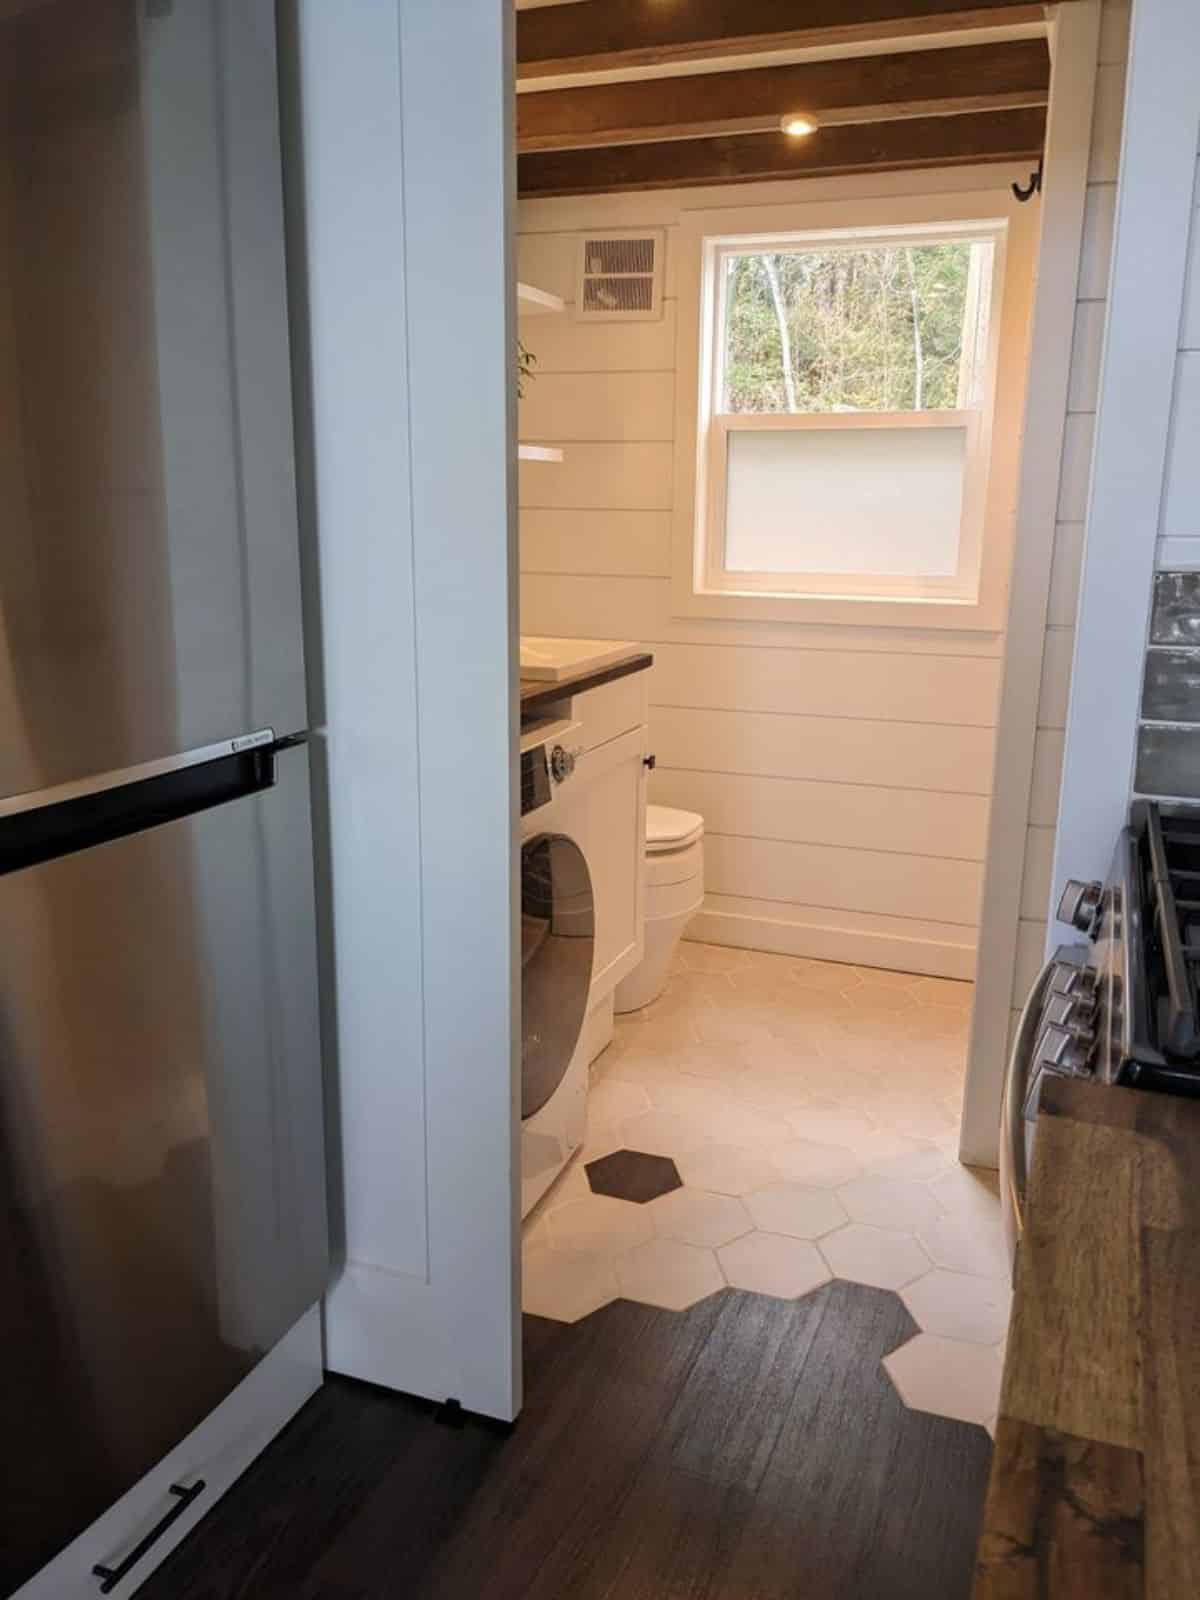 double door refrigerator in kitchen on the entrance way of bathroom